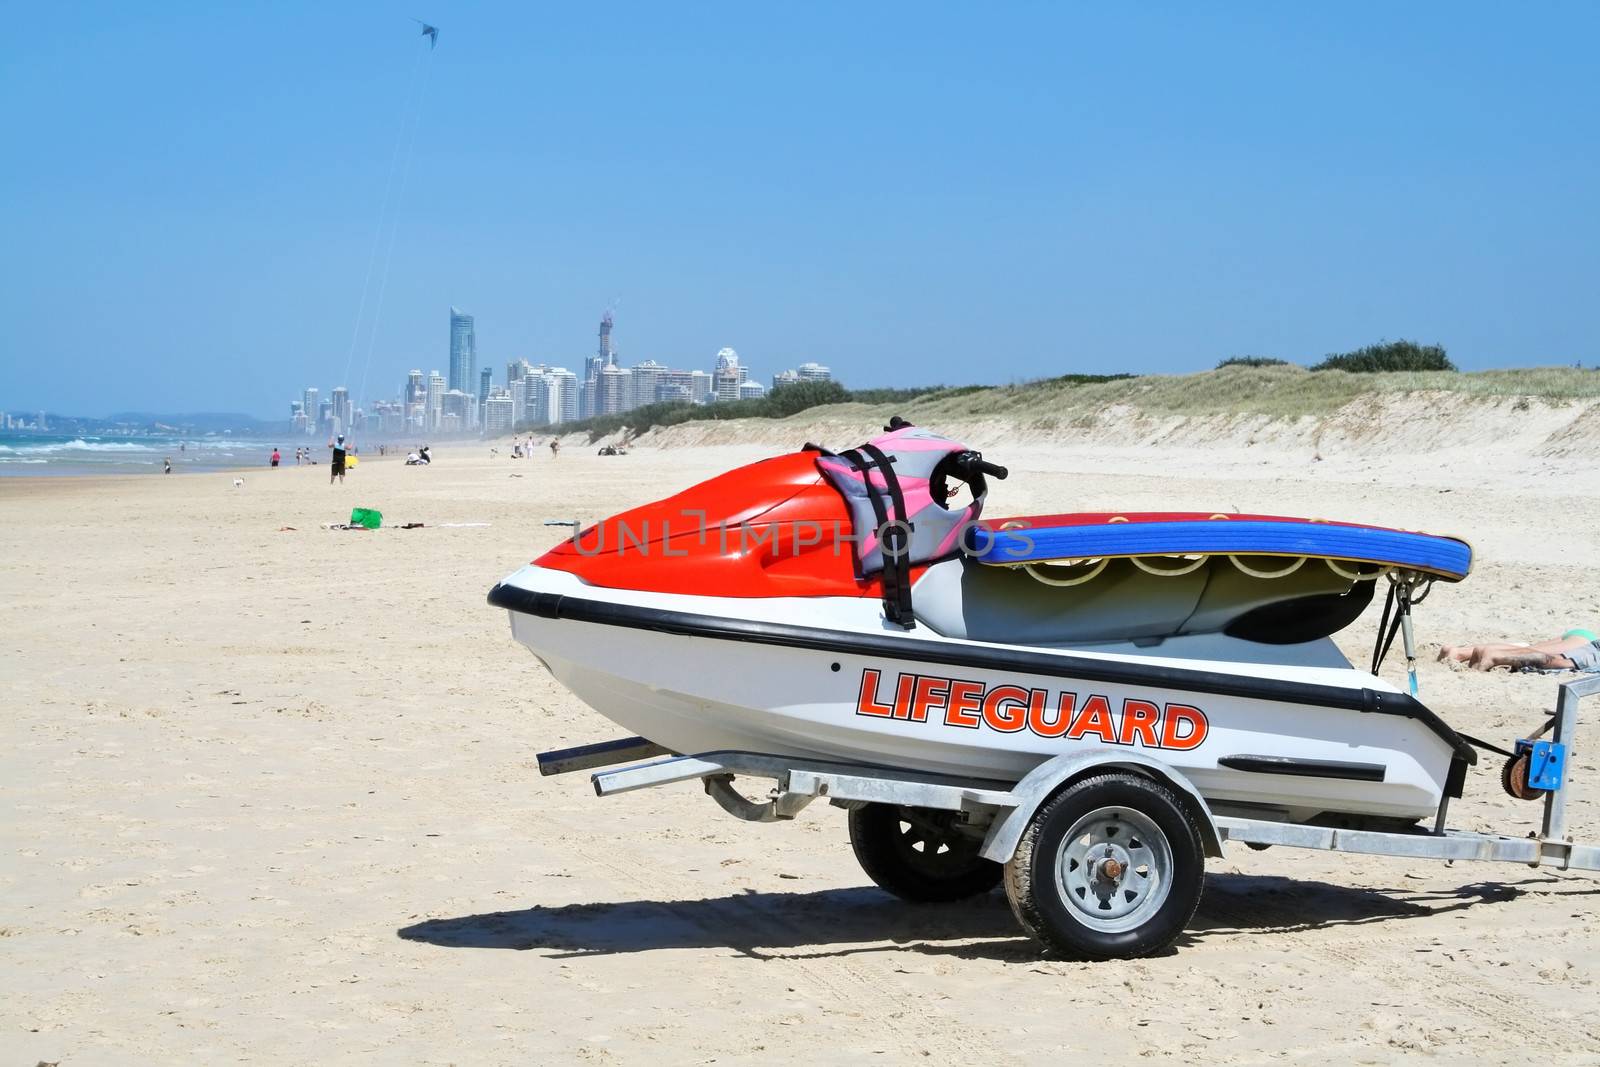 Lifeguard Jet Ski by jabiru